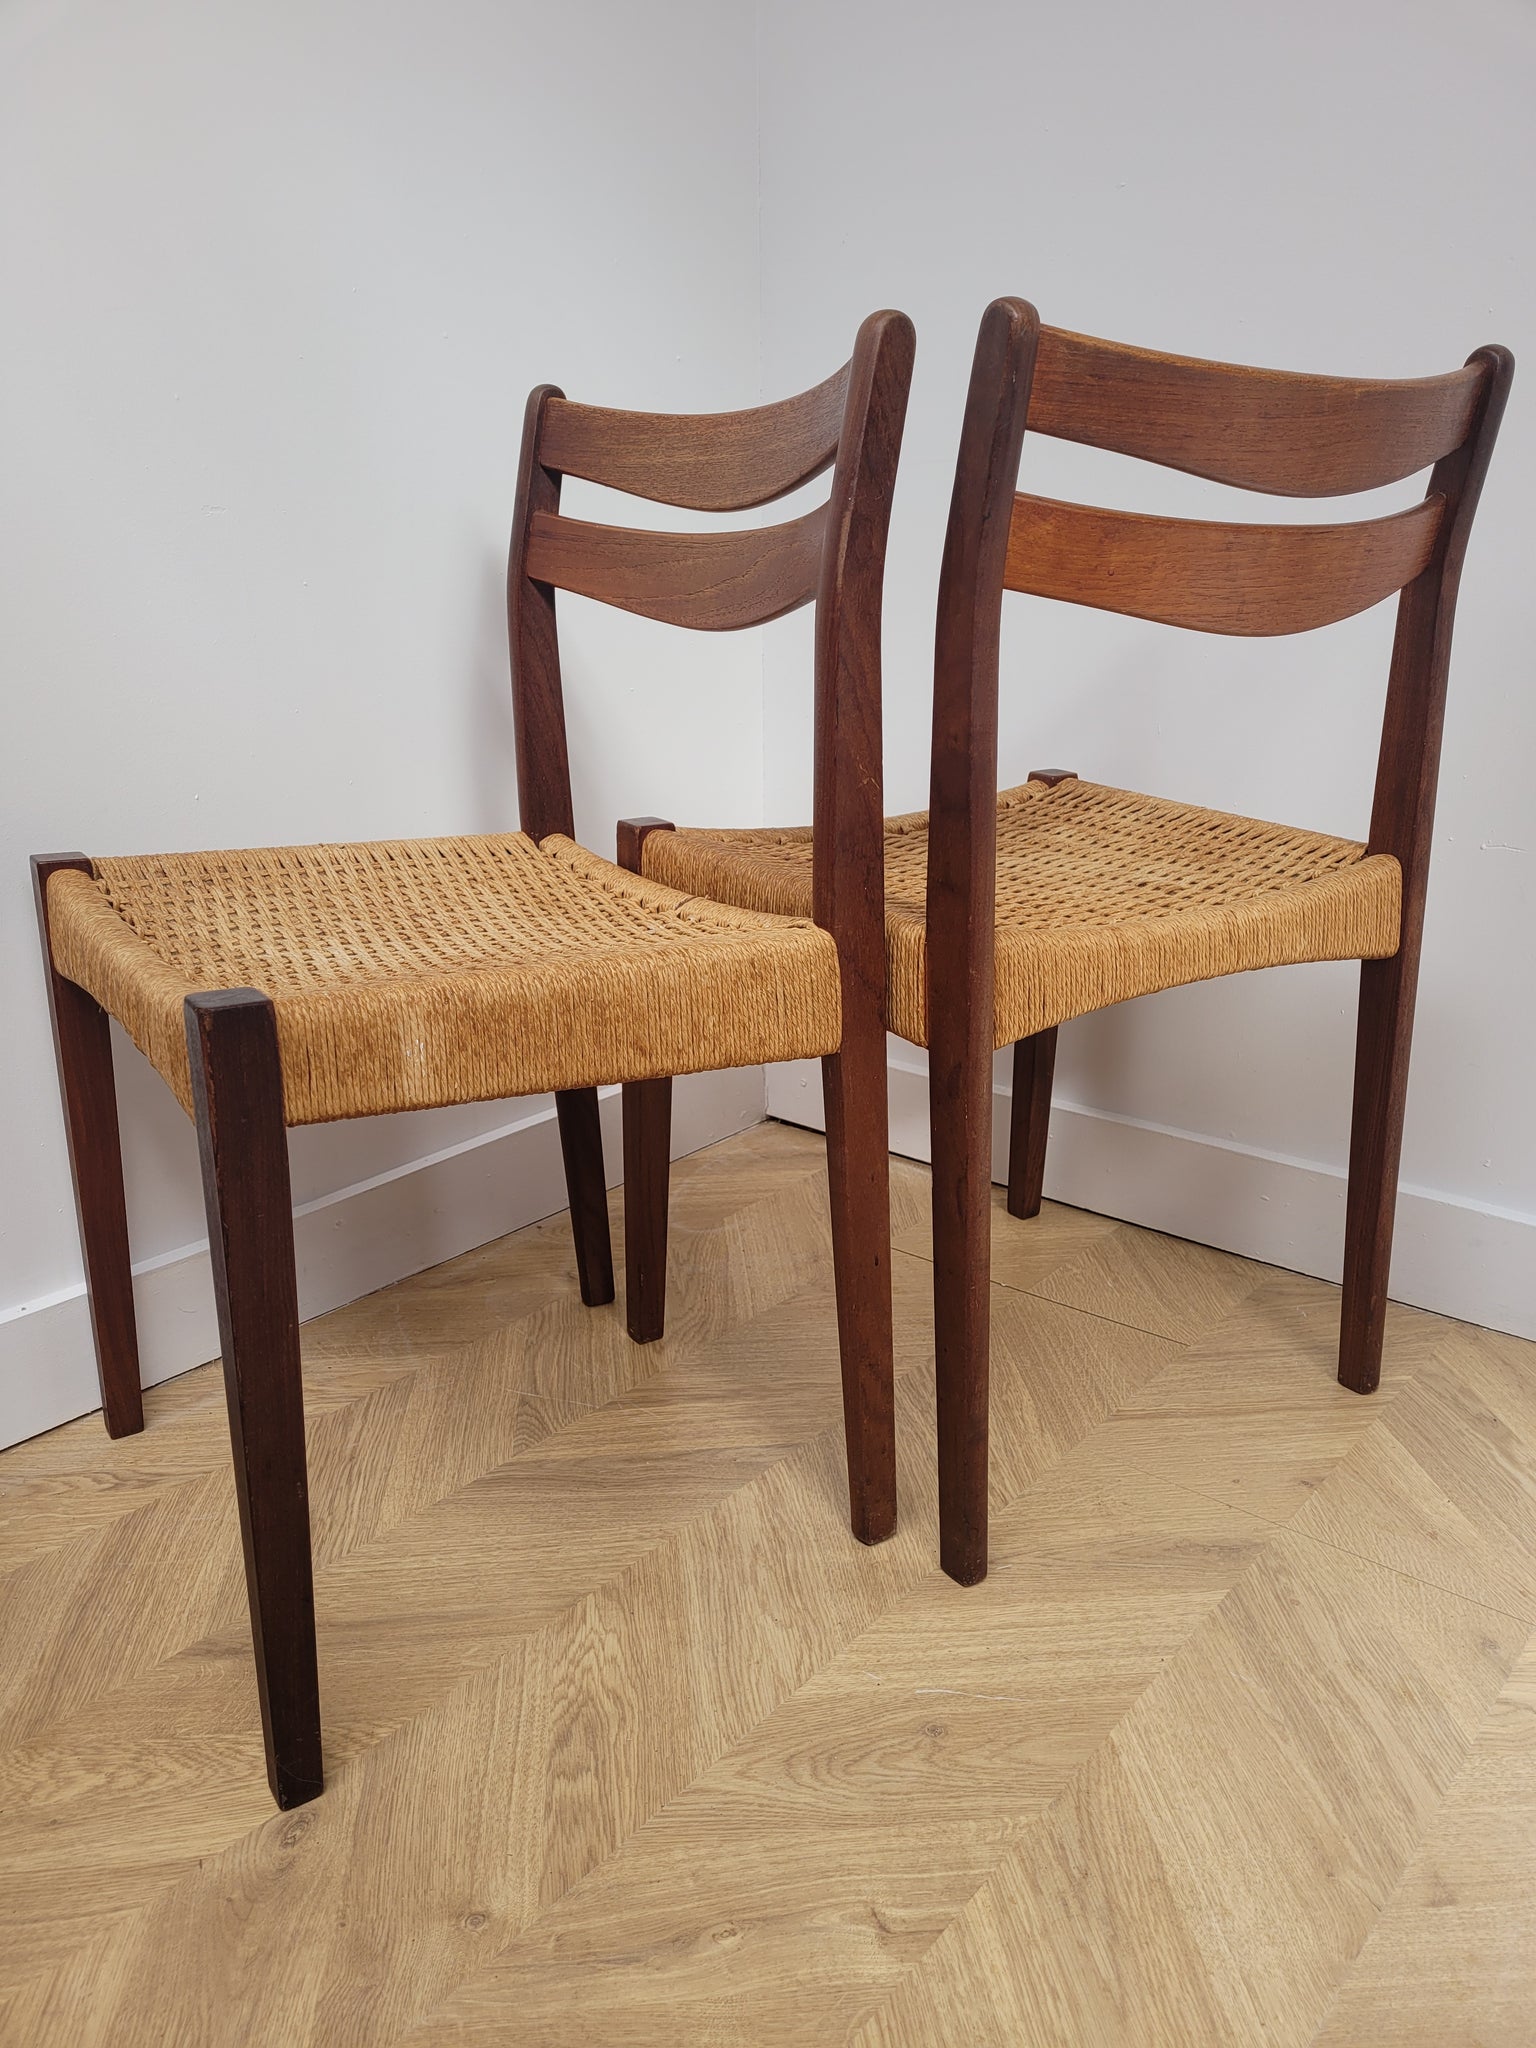 Mogen Kolds Dining Chairs